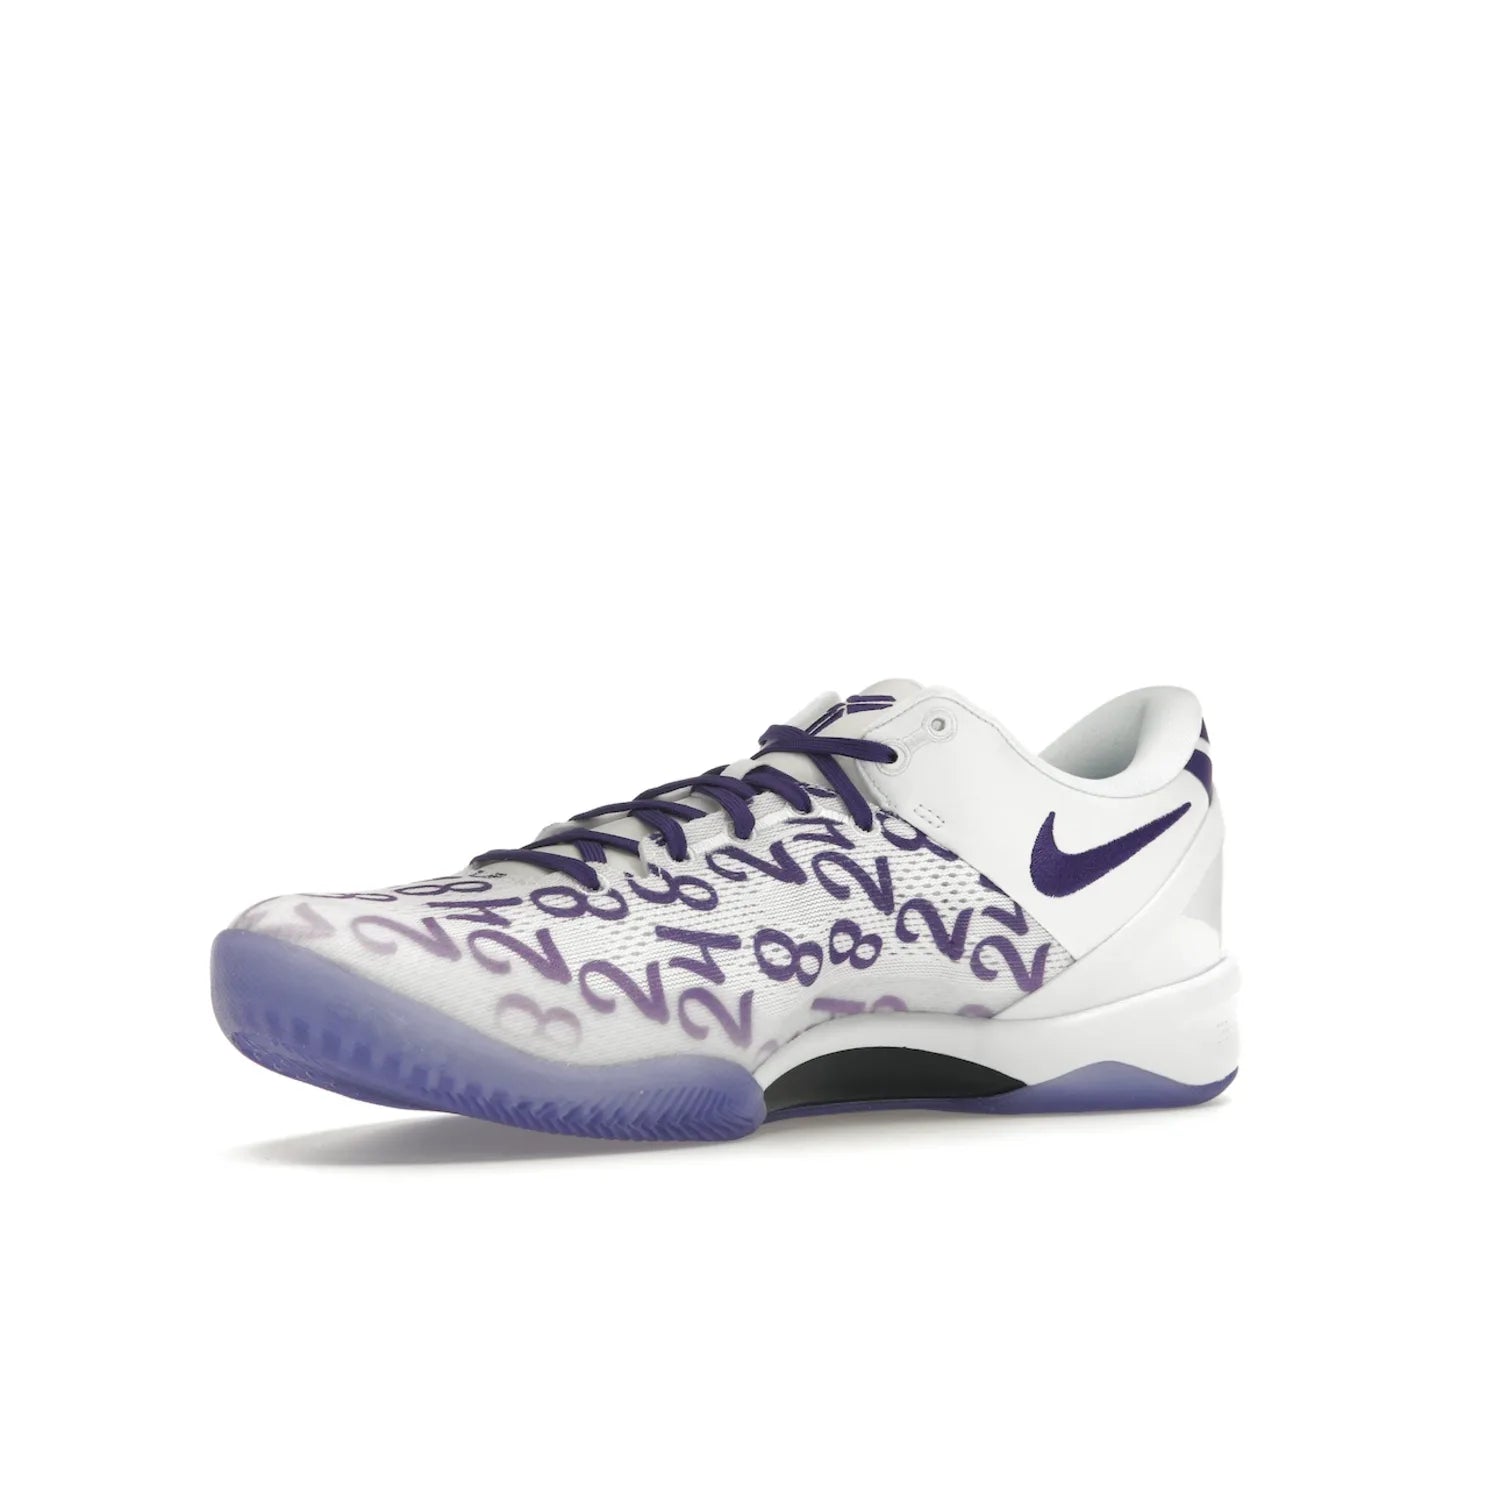 Nike Kobe 8 Protro Court Purple - Image 16 - Only at www.BallersClubKickz.com - 